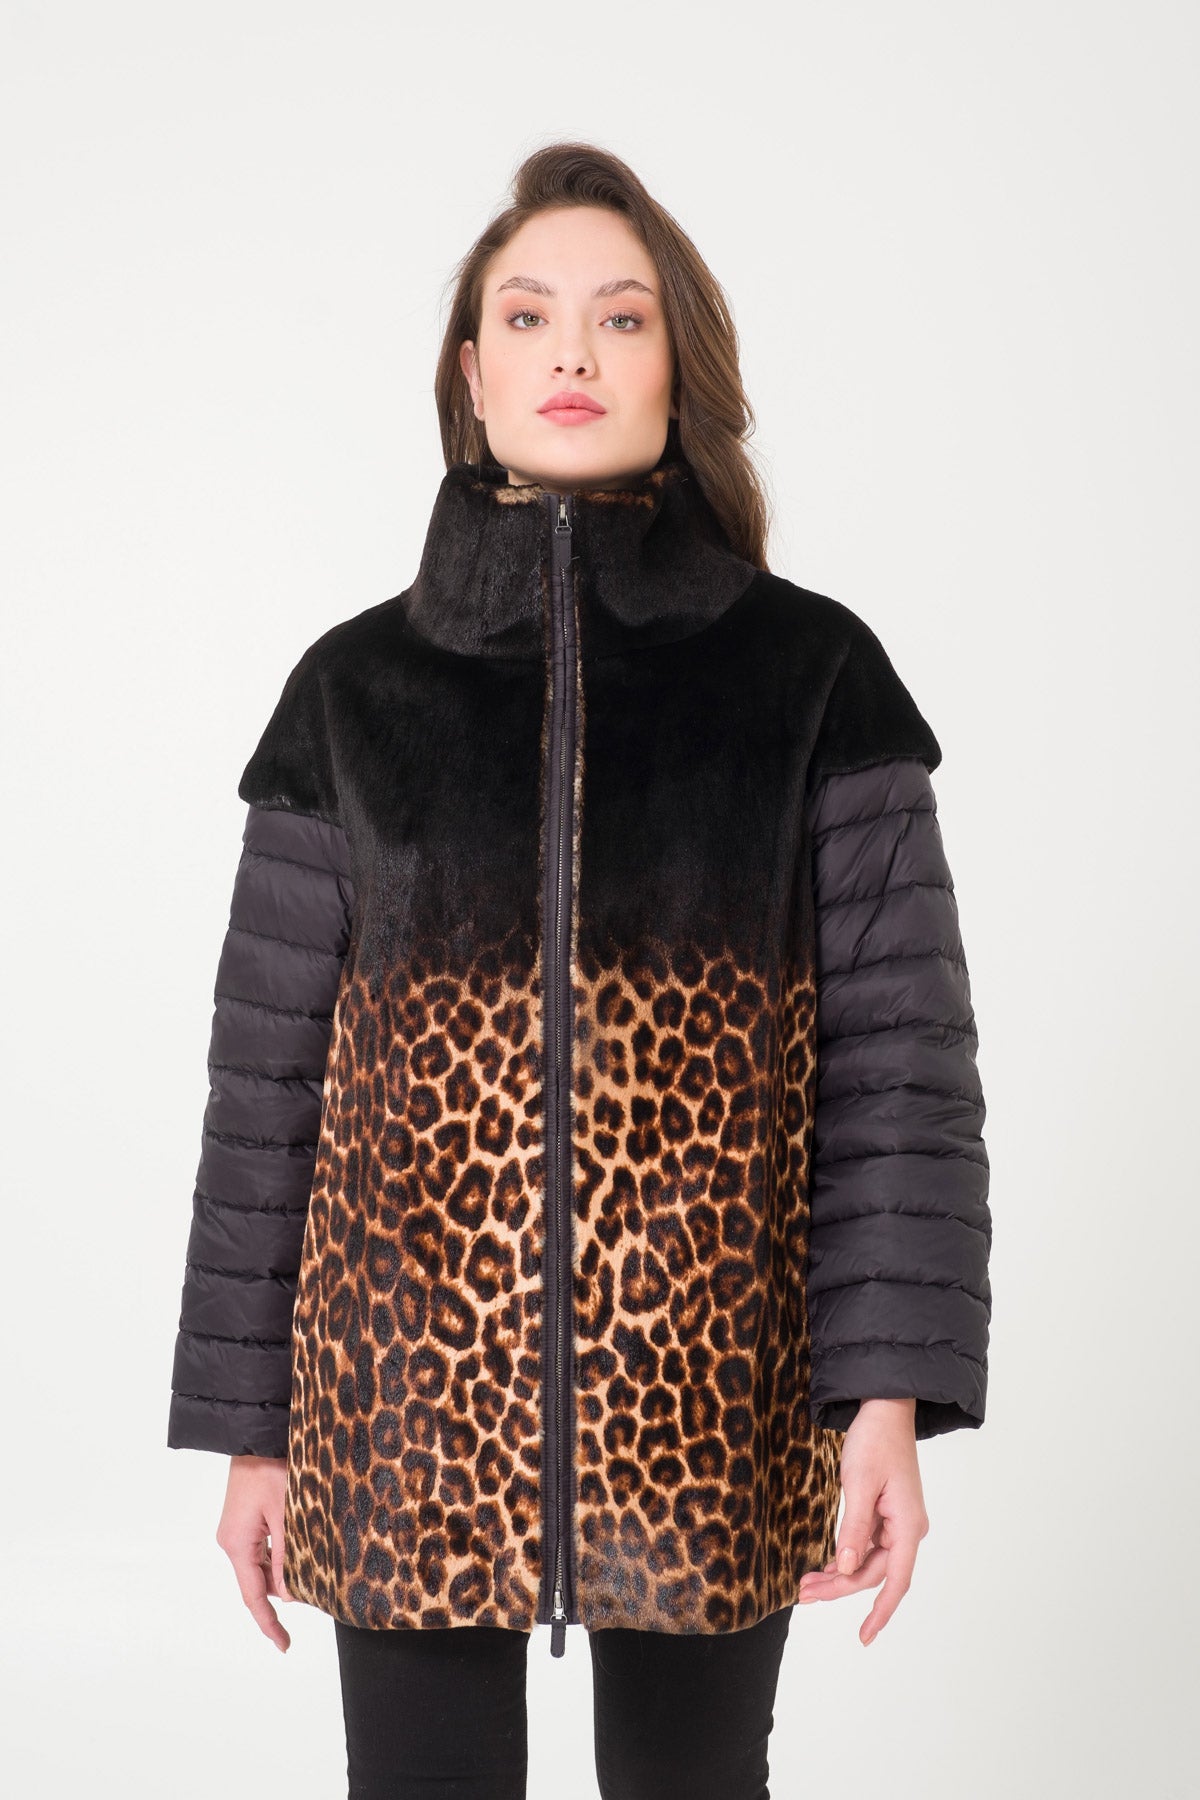 Leopard Patterned Fur Coat